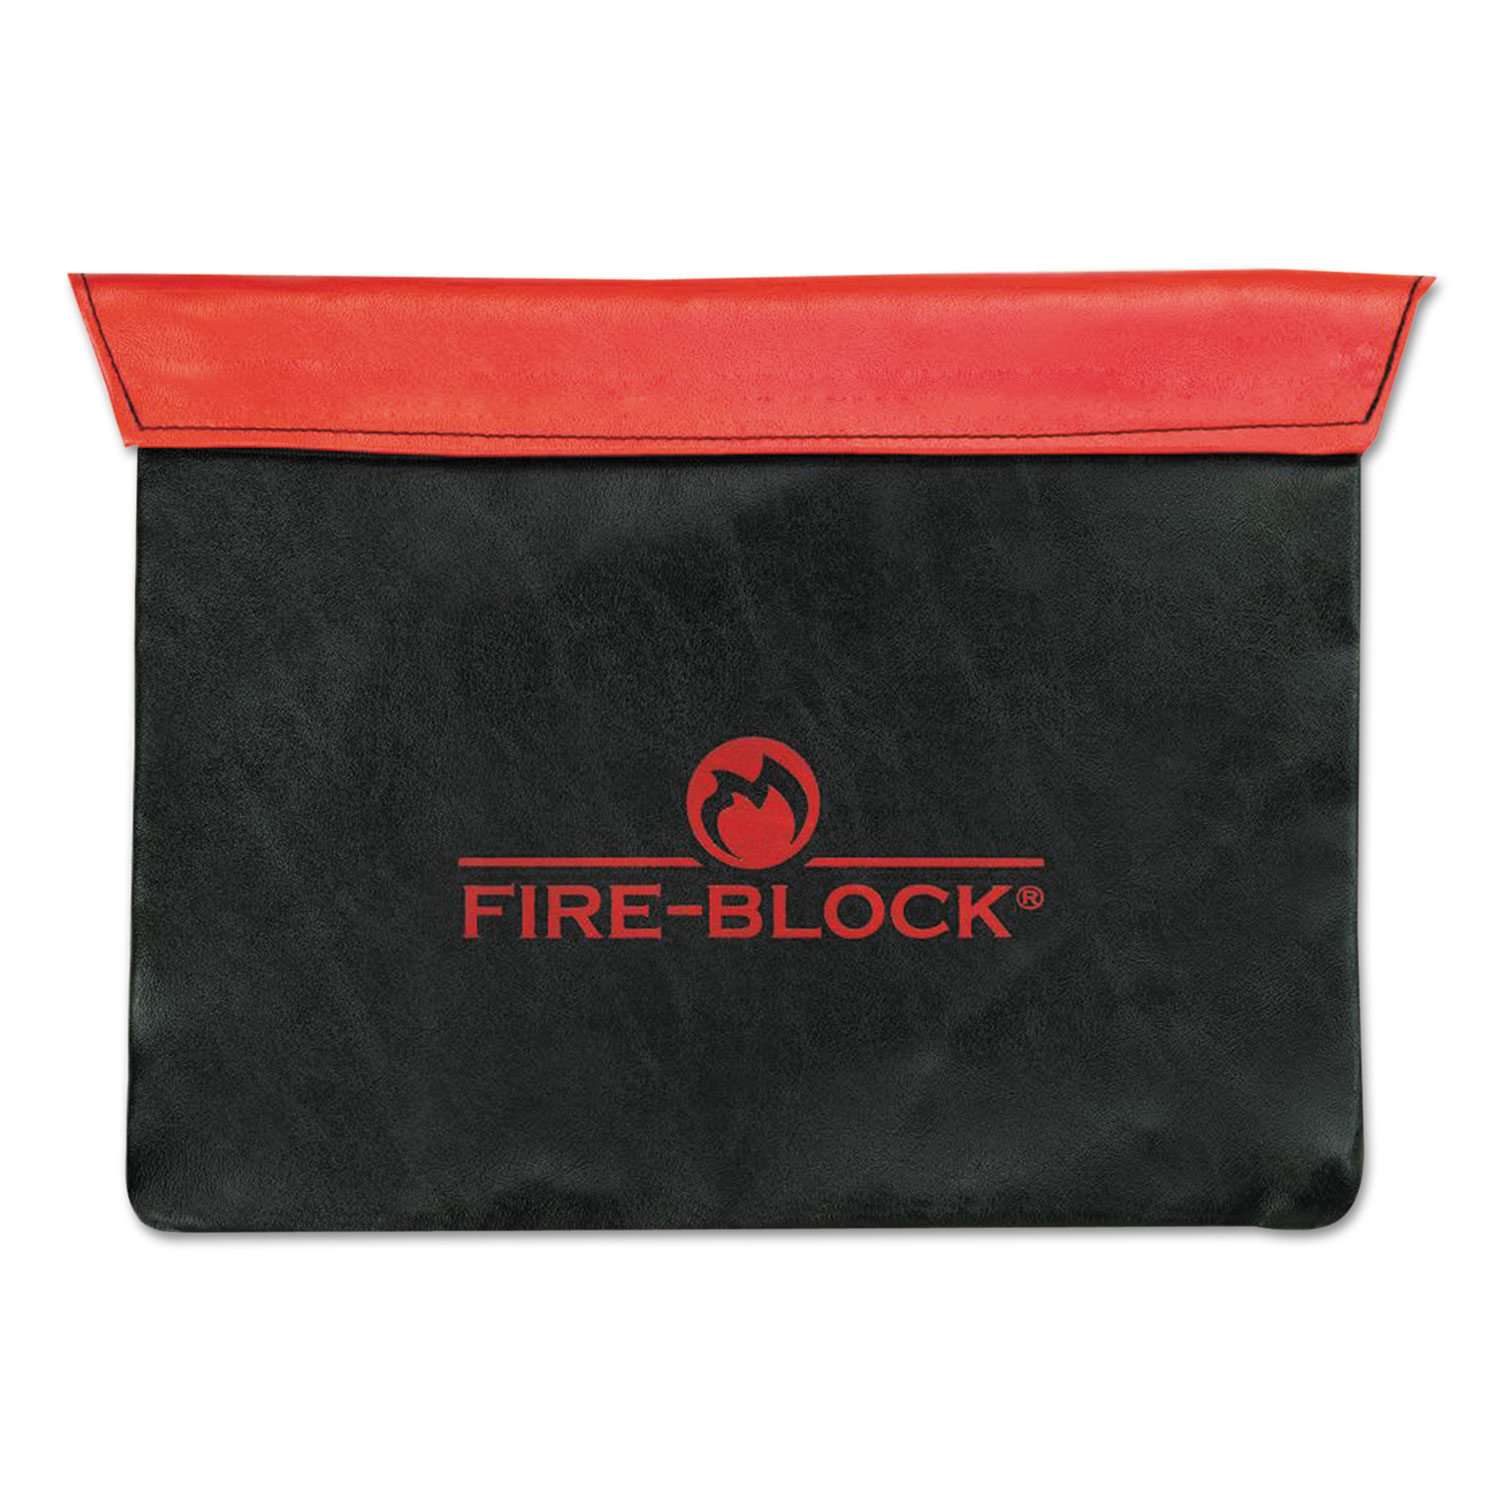 Fire-Block Document Portfolio, 12 1/2 x 10 x 1/2, Red/Black